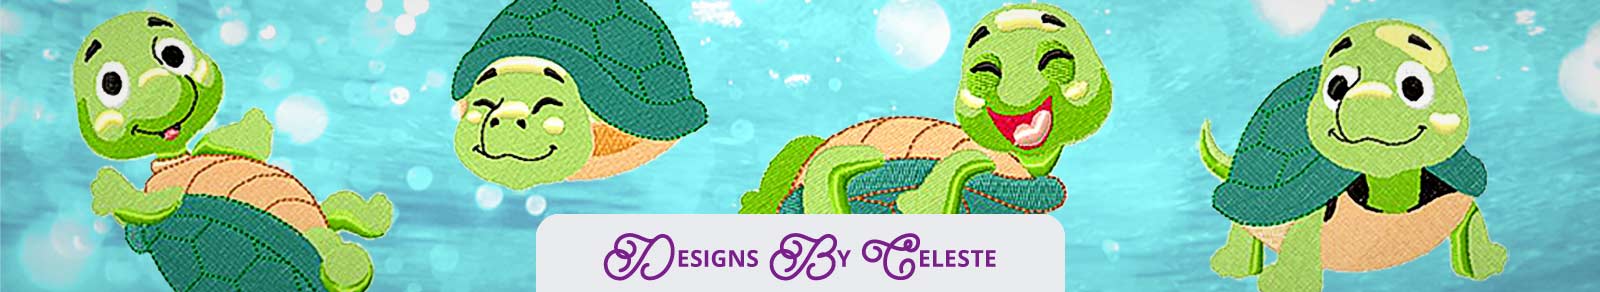 designs by celeste